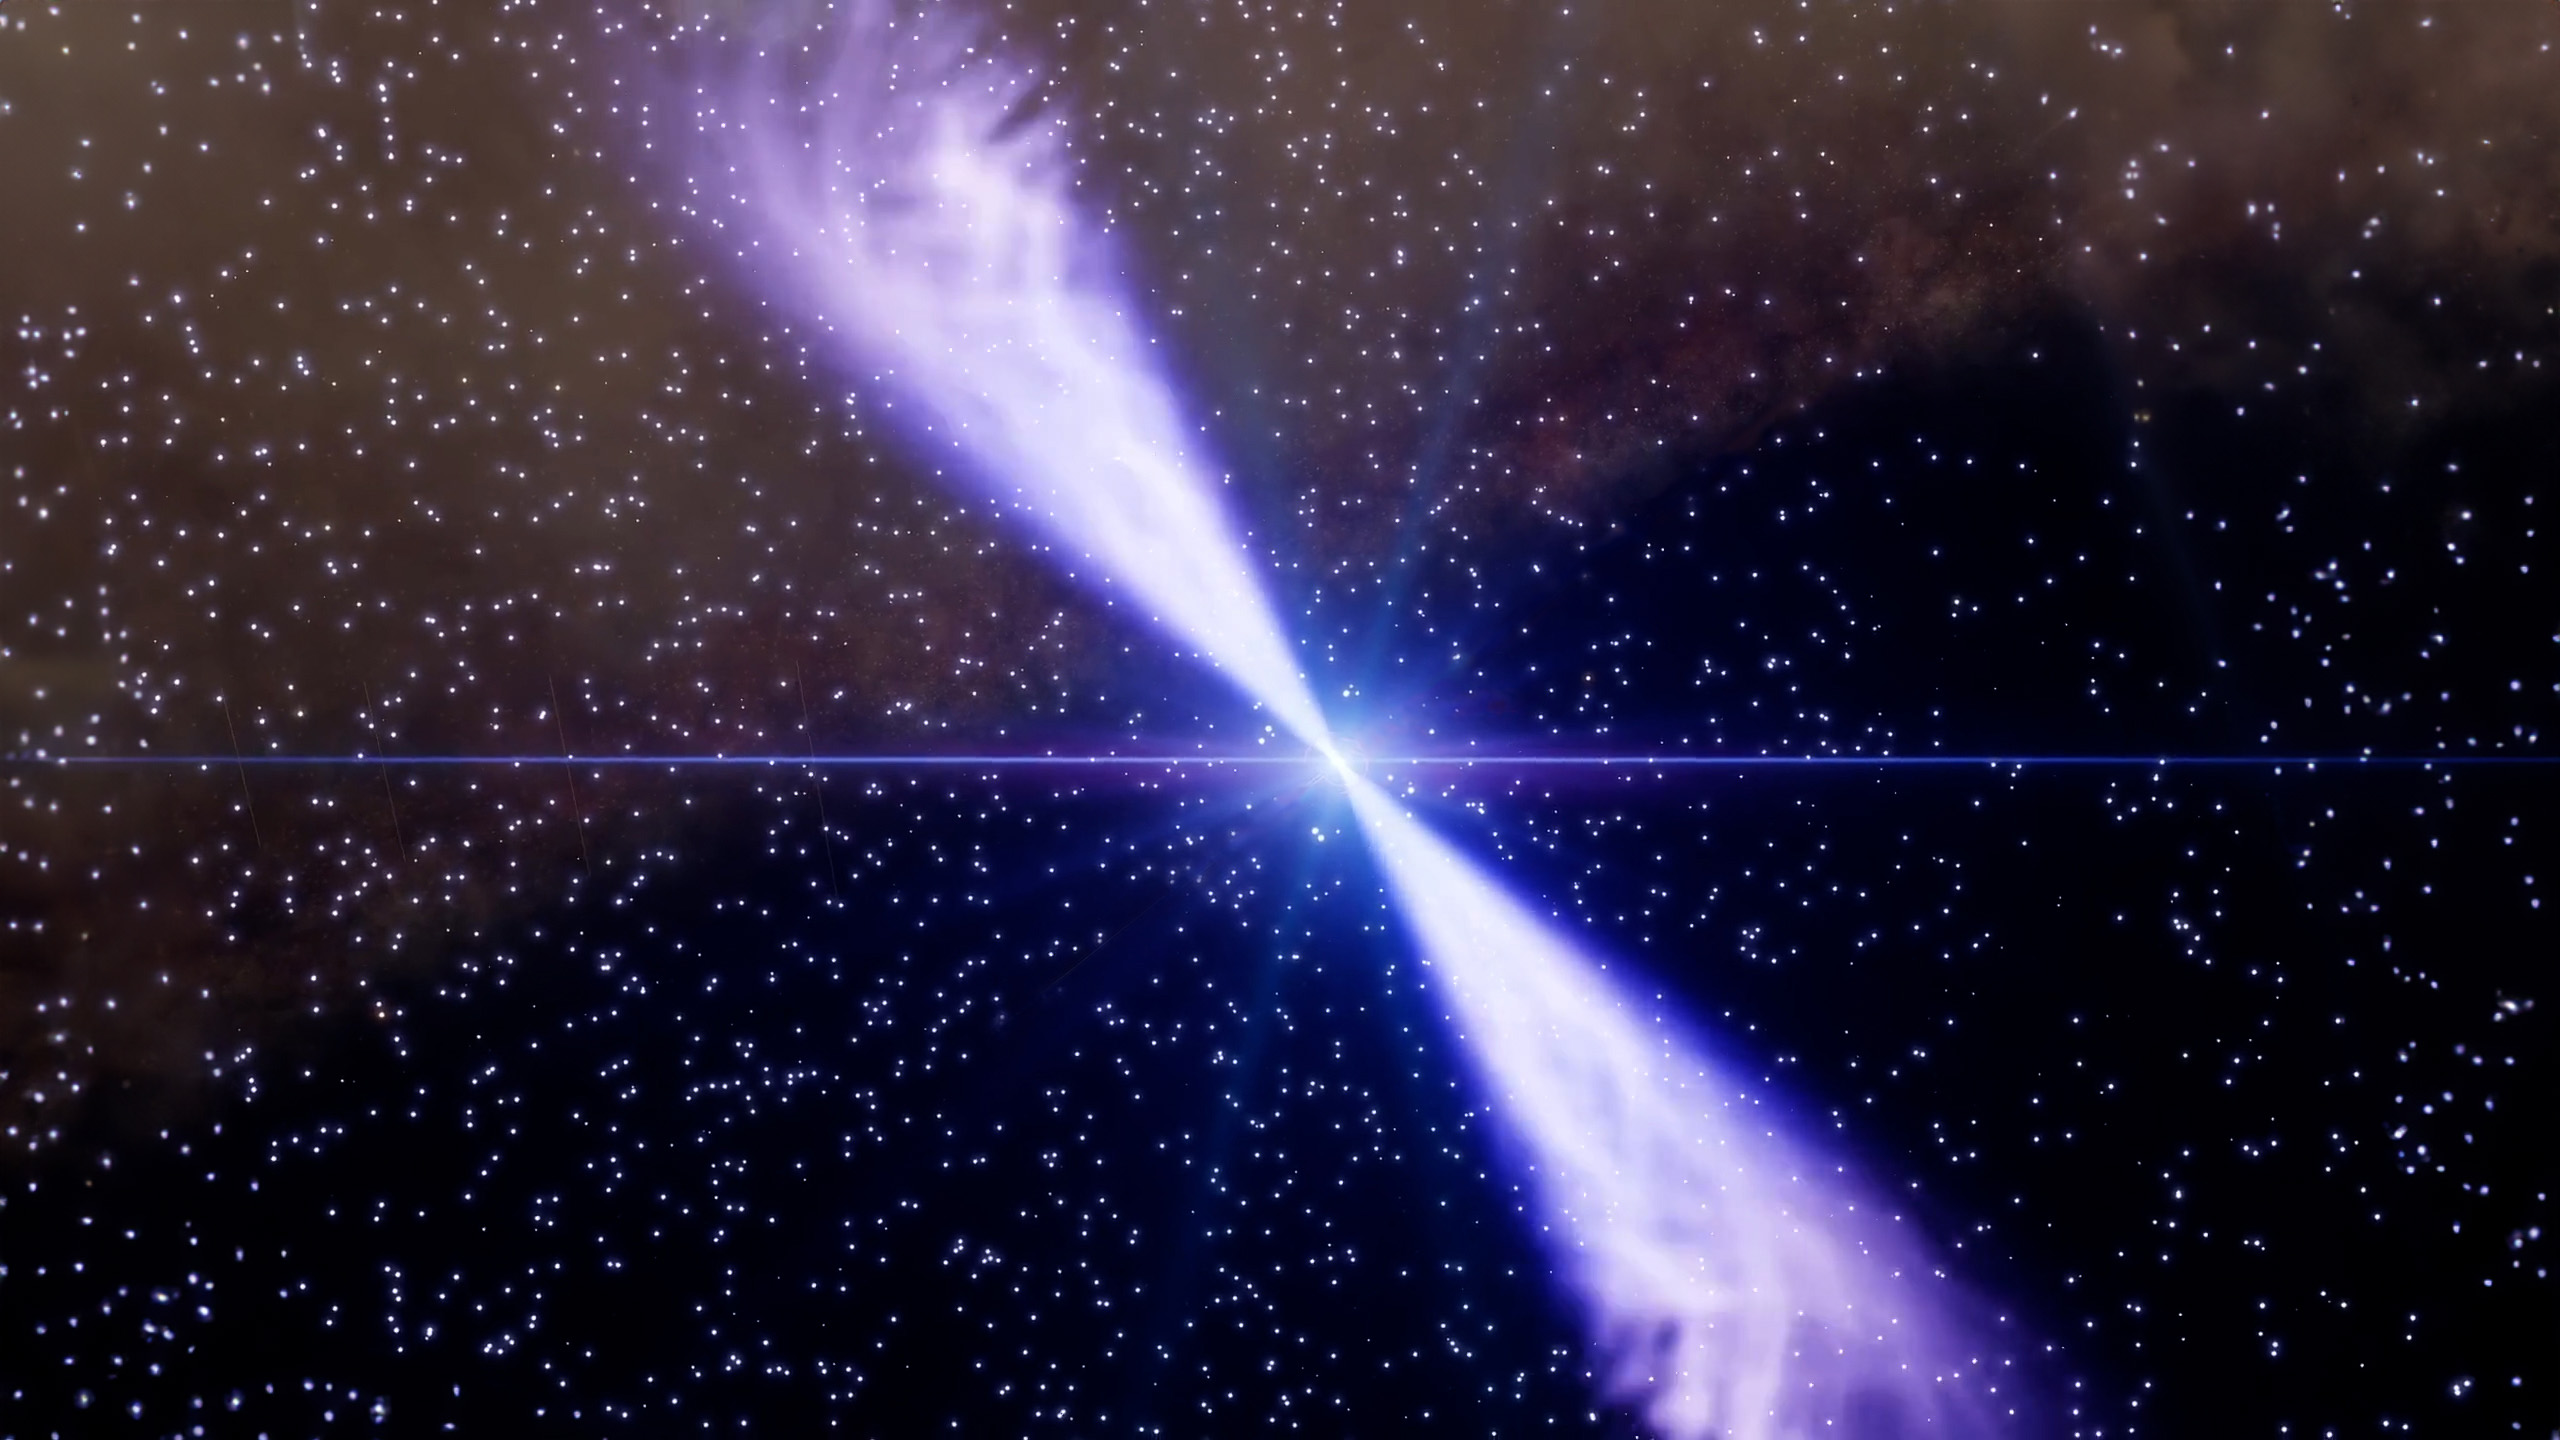 Both neutron stars aligned